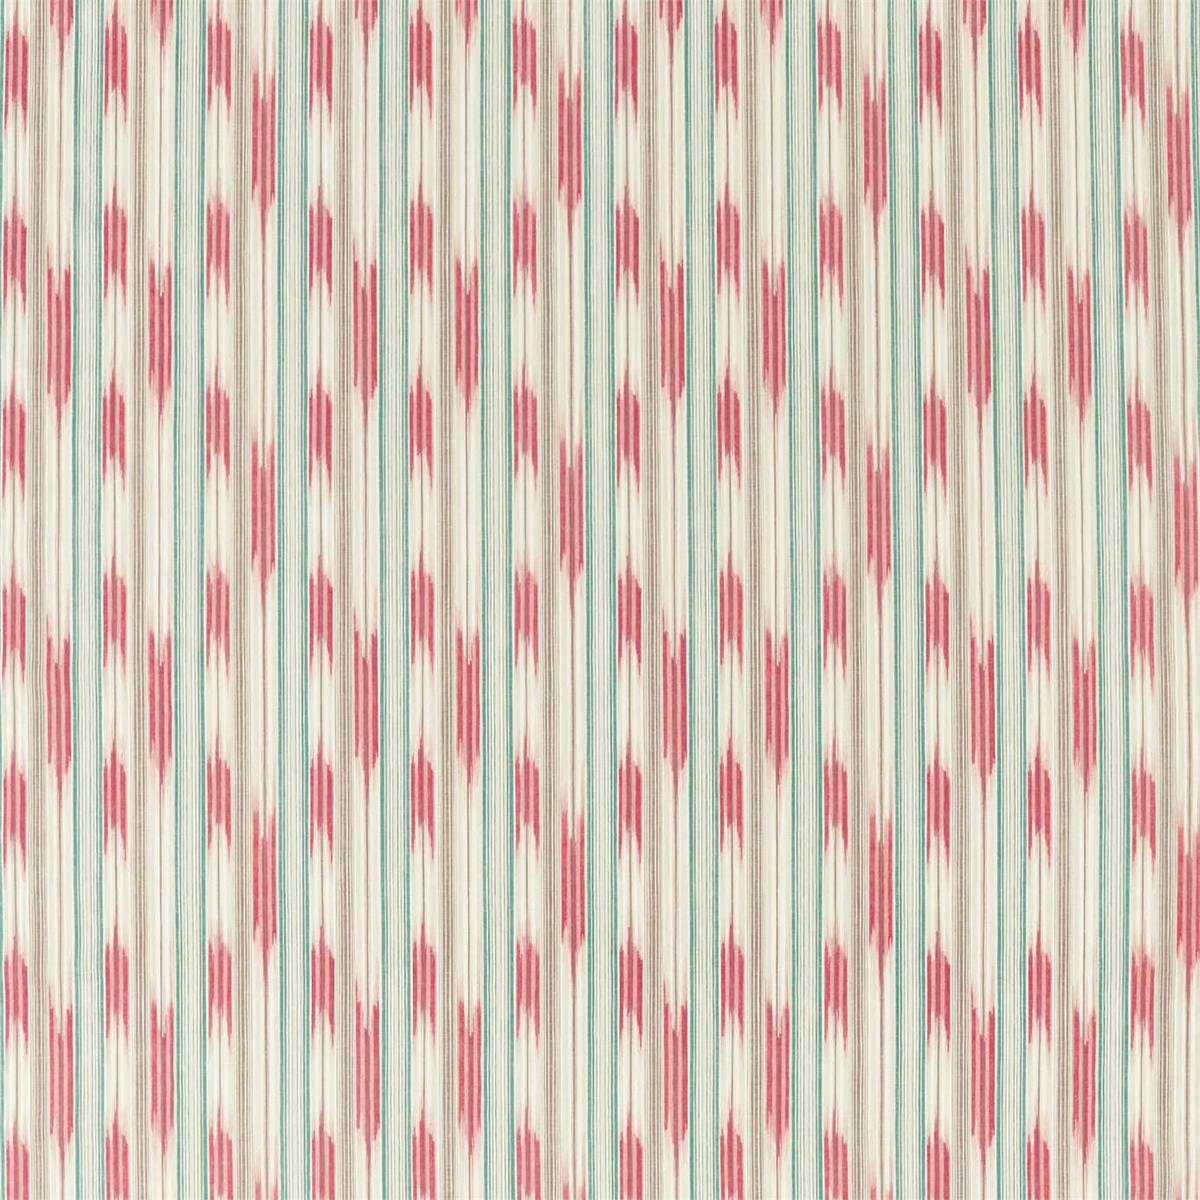 Ishi Rose/Nettle Fabric by Sanderson